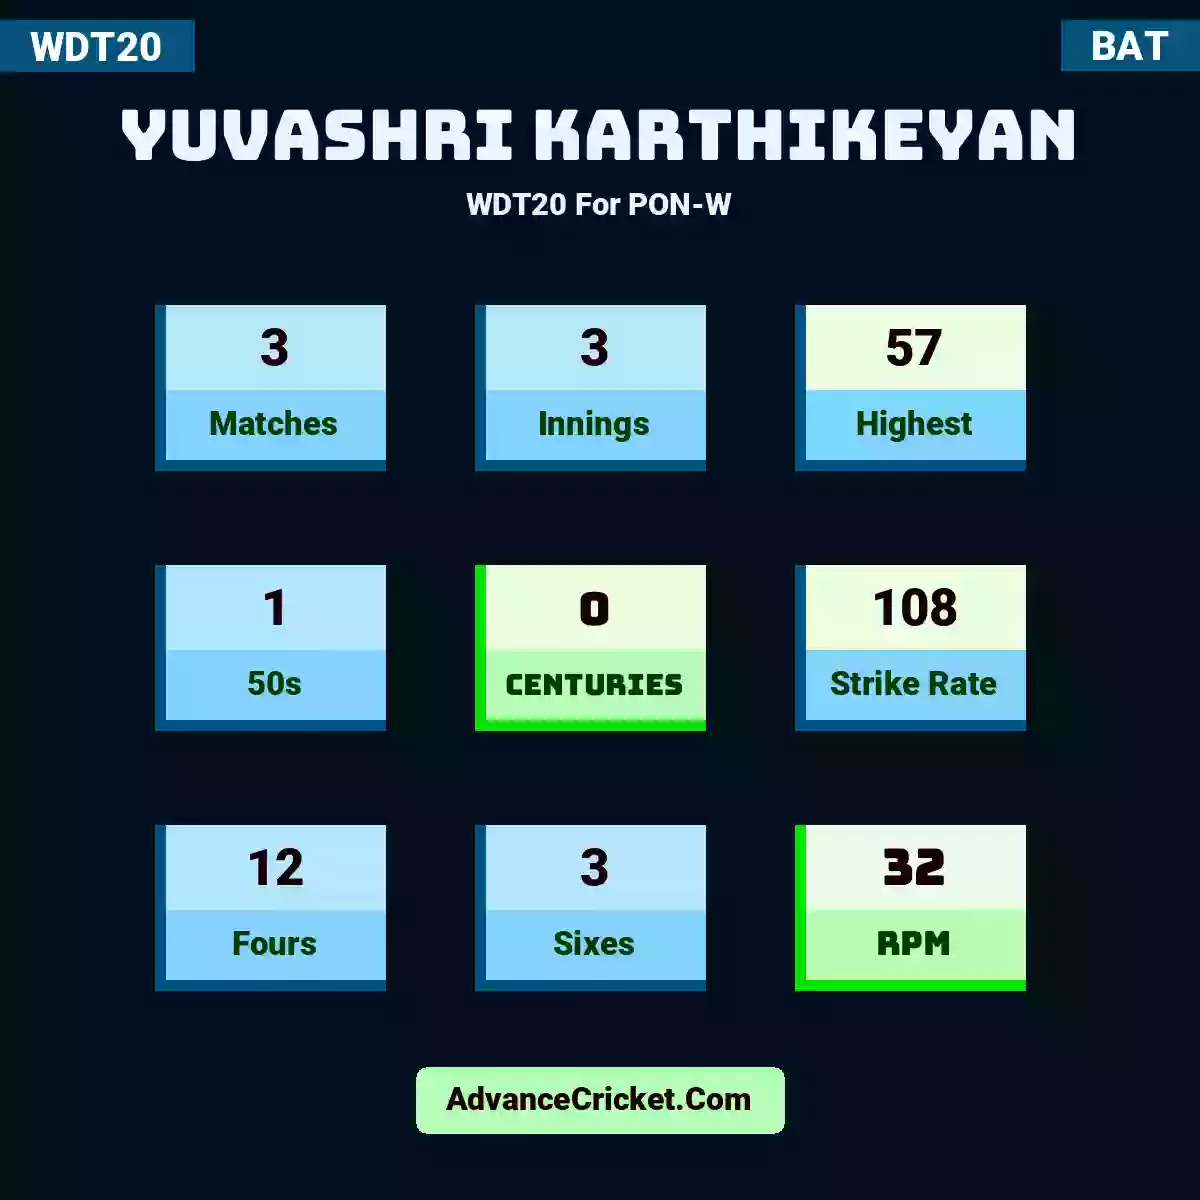 Yuvashri Karthikeyan WDT20  For PON-W, Yuvashri Karthikeyan played 3 matches, scored 57 runs as highest, 1 half-centuries, and 0 centuries, with a strike rate of 108. Y.Karthikeyan hit 12 fours and 3 sixes, with an RPM of 32.